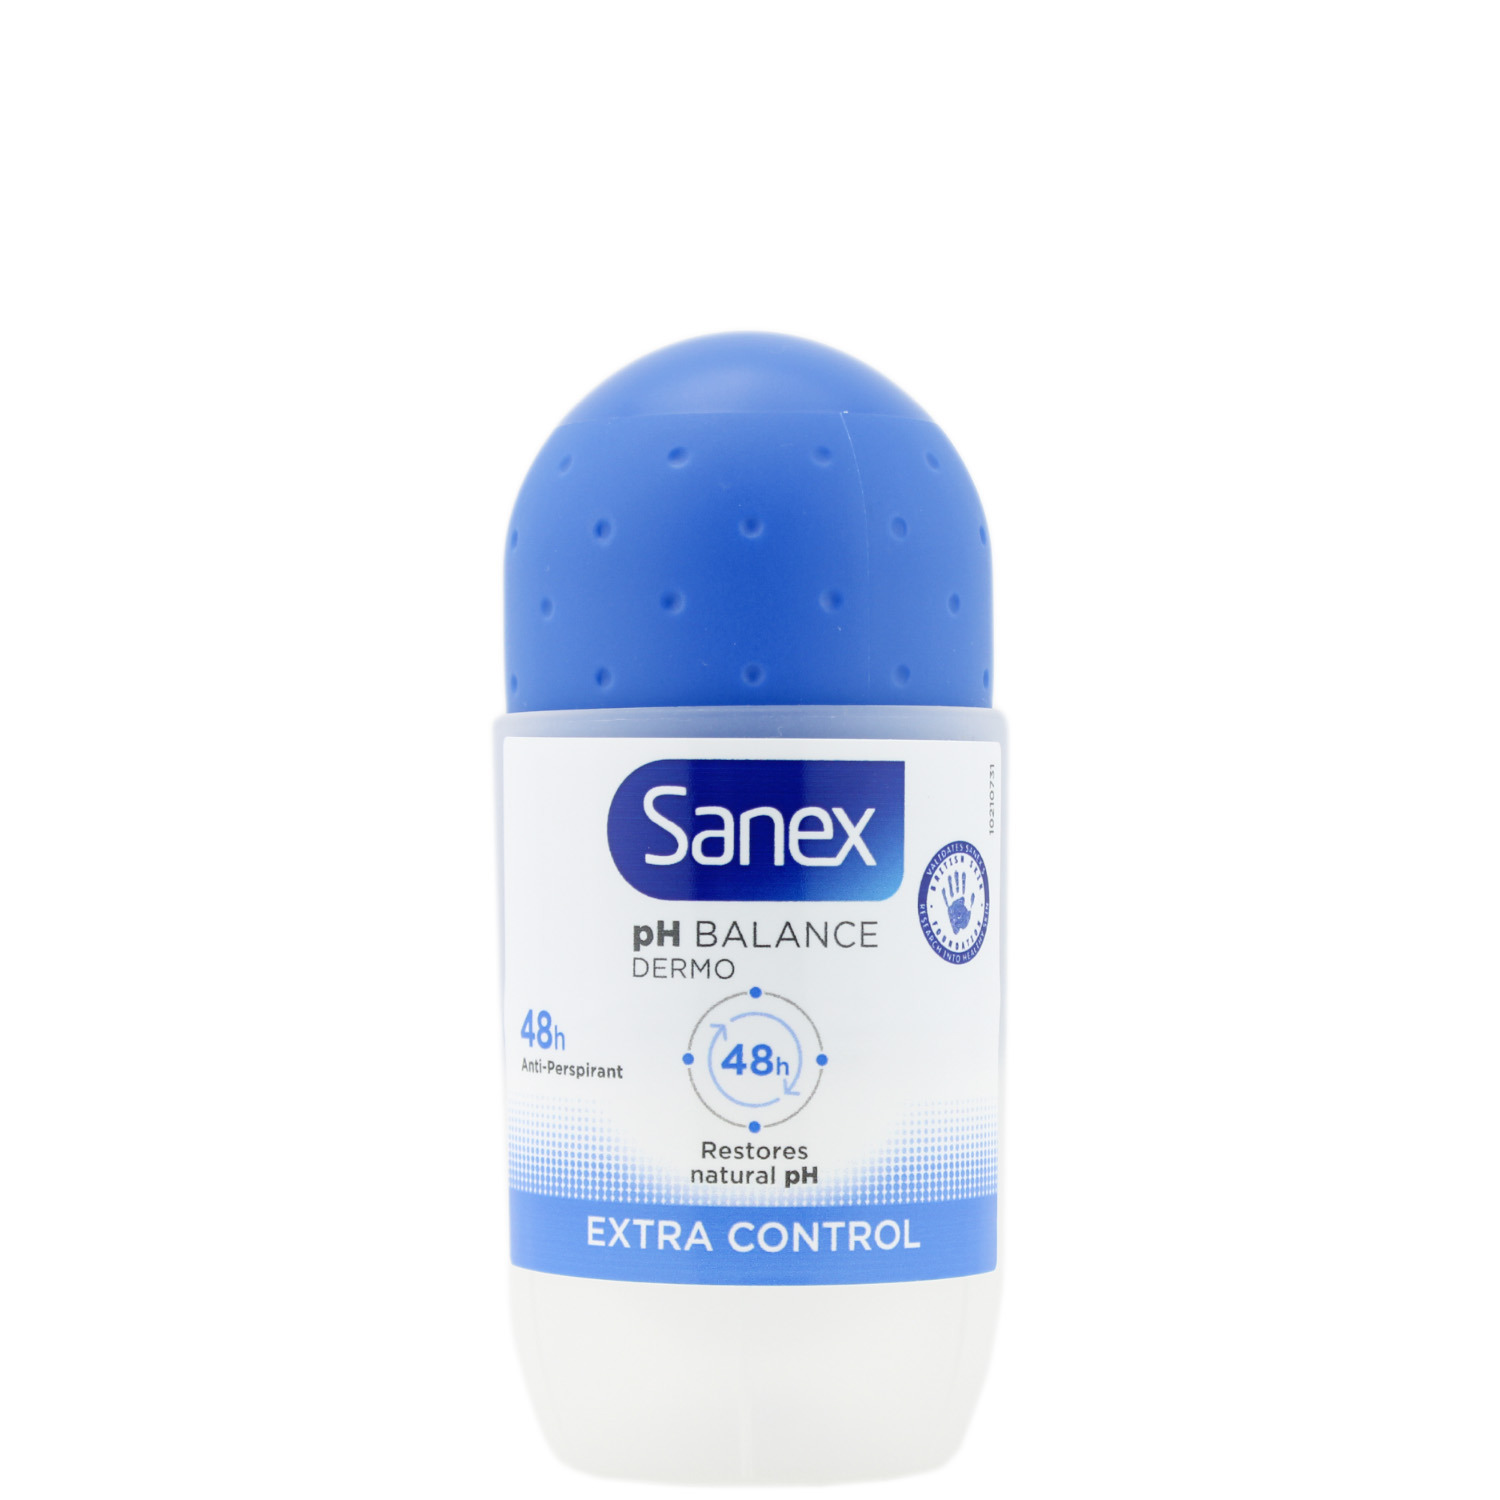 Sanex pH Balance Dermo Extra Control 48h Antiperspirant Deodorant Roll-On 50ml